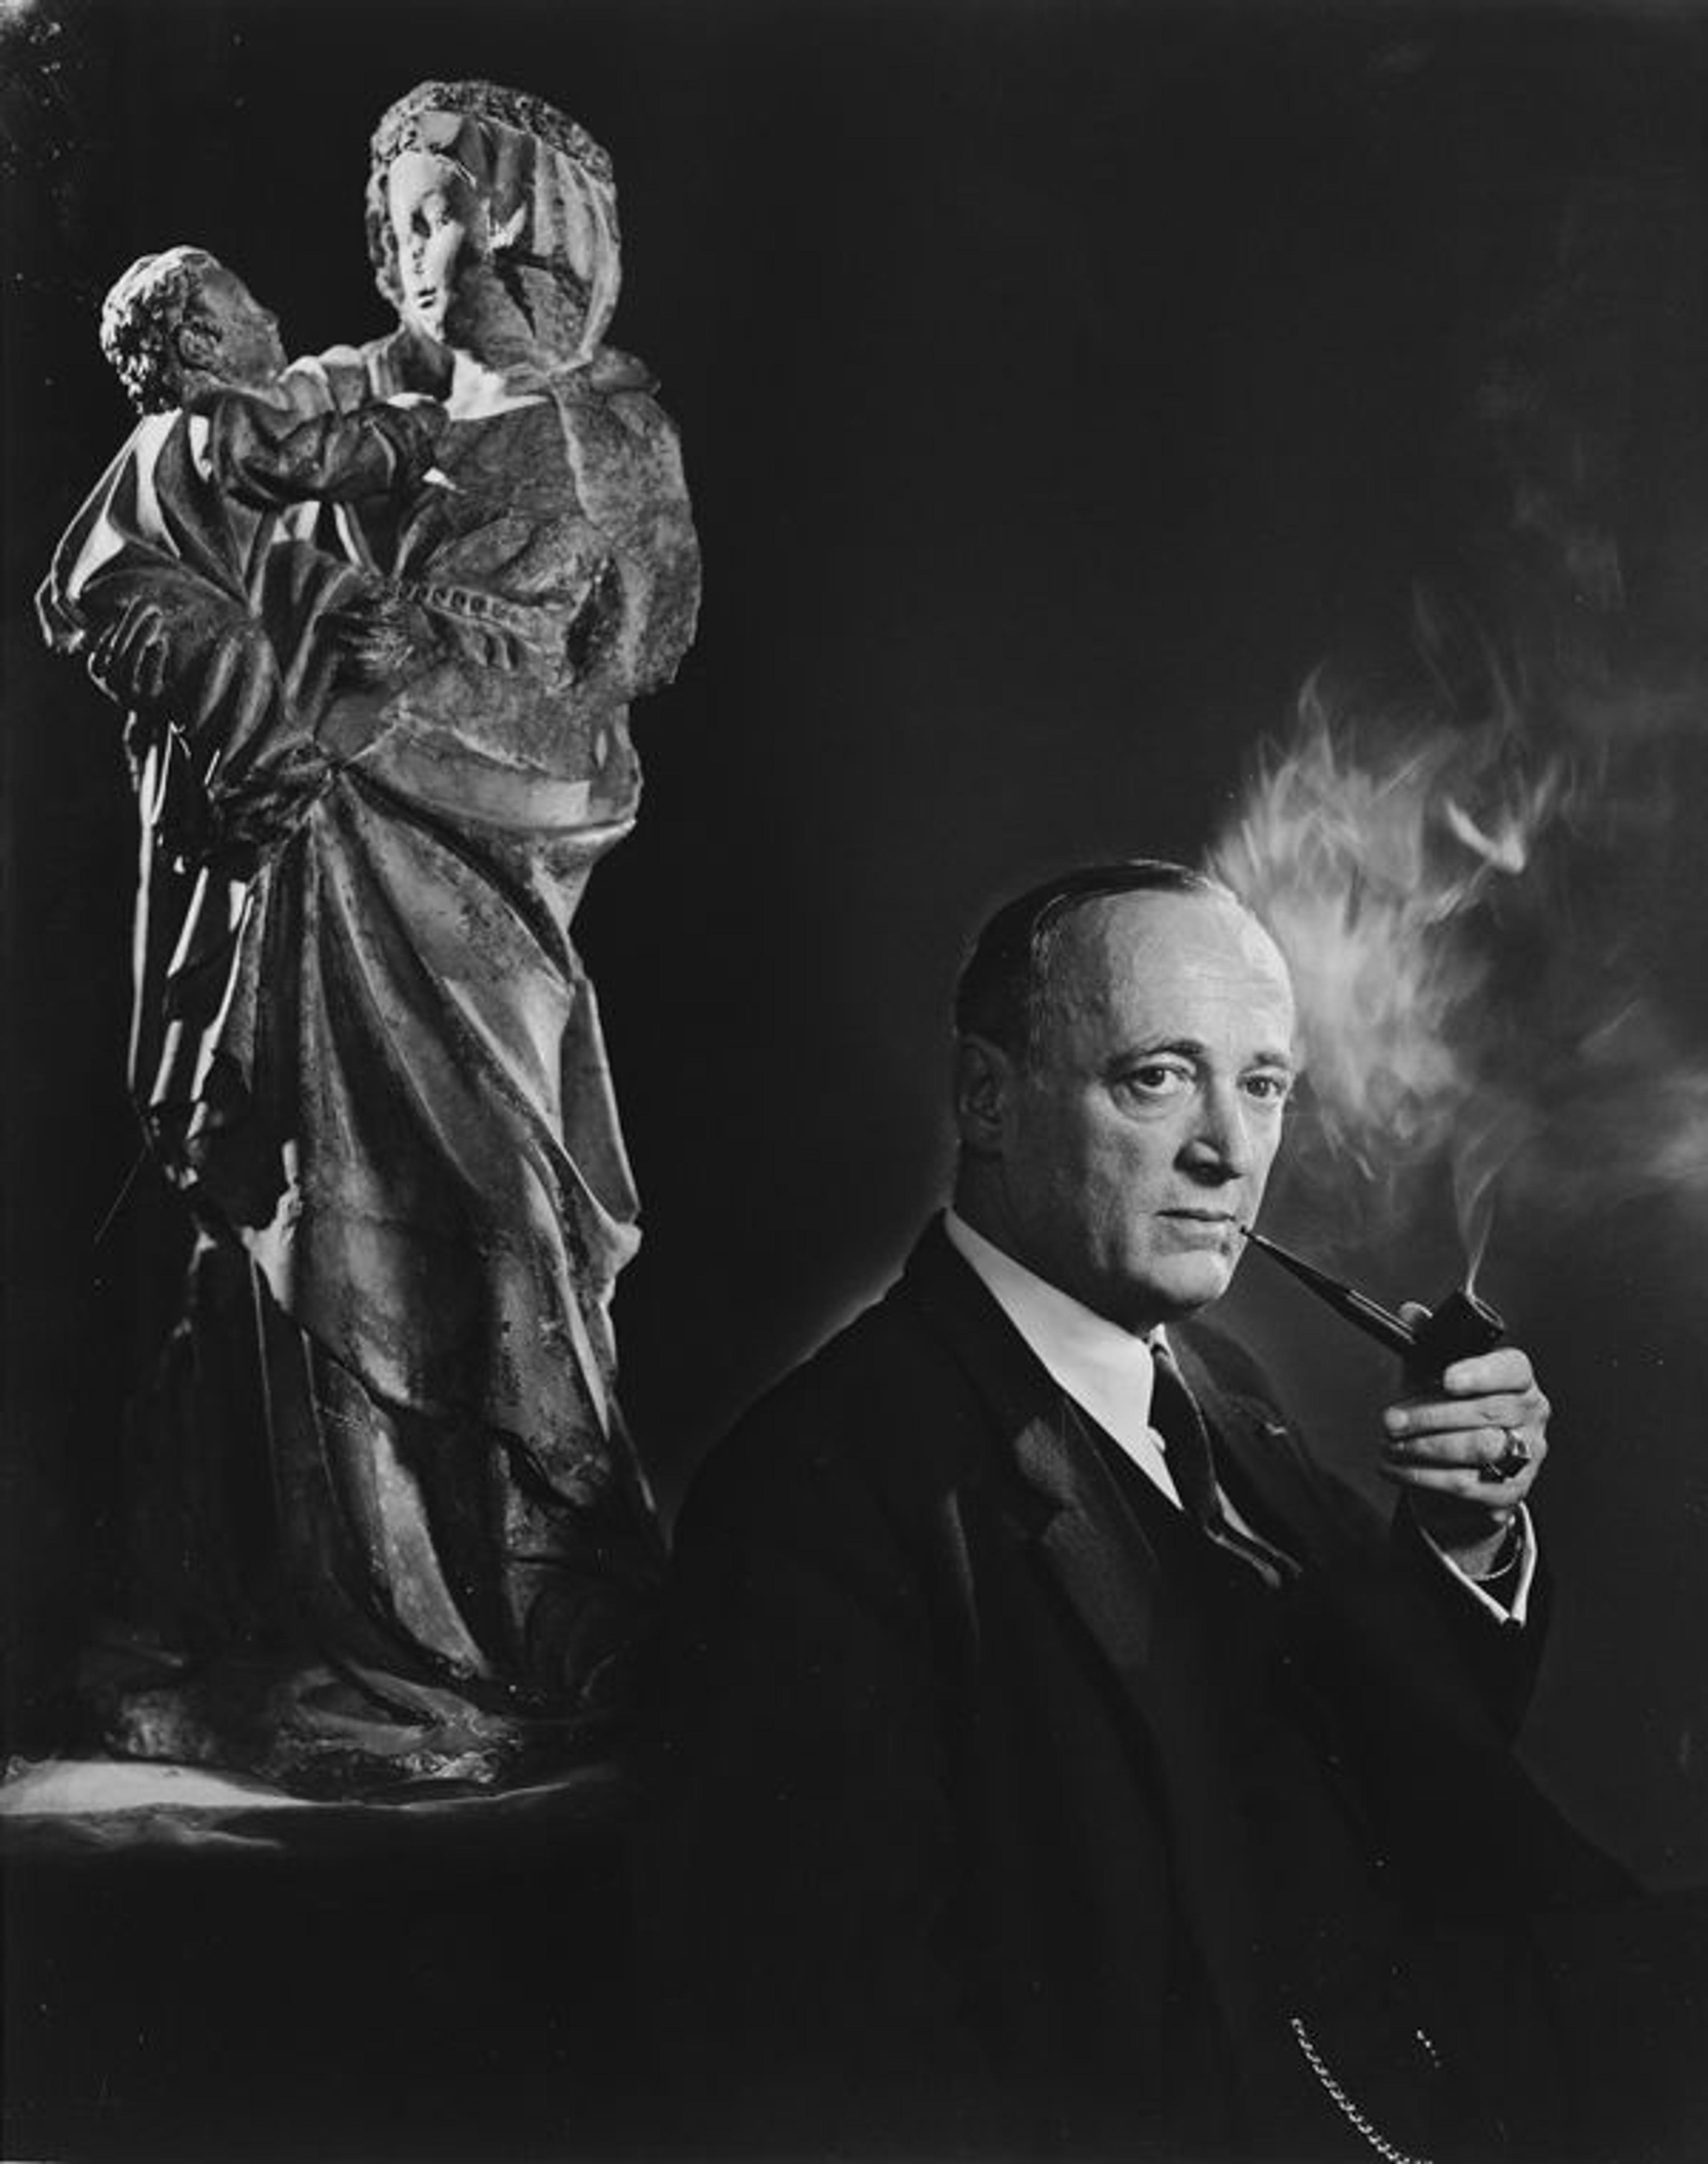 Photograph of James Rorimer, 1964